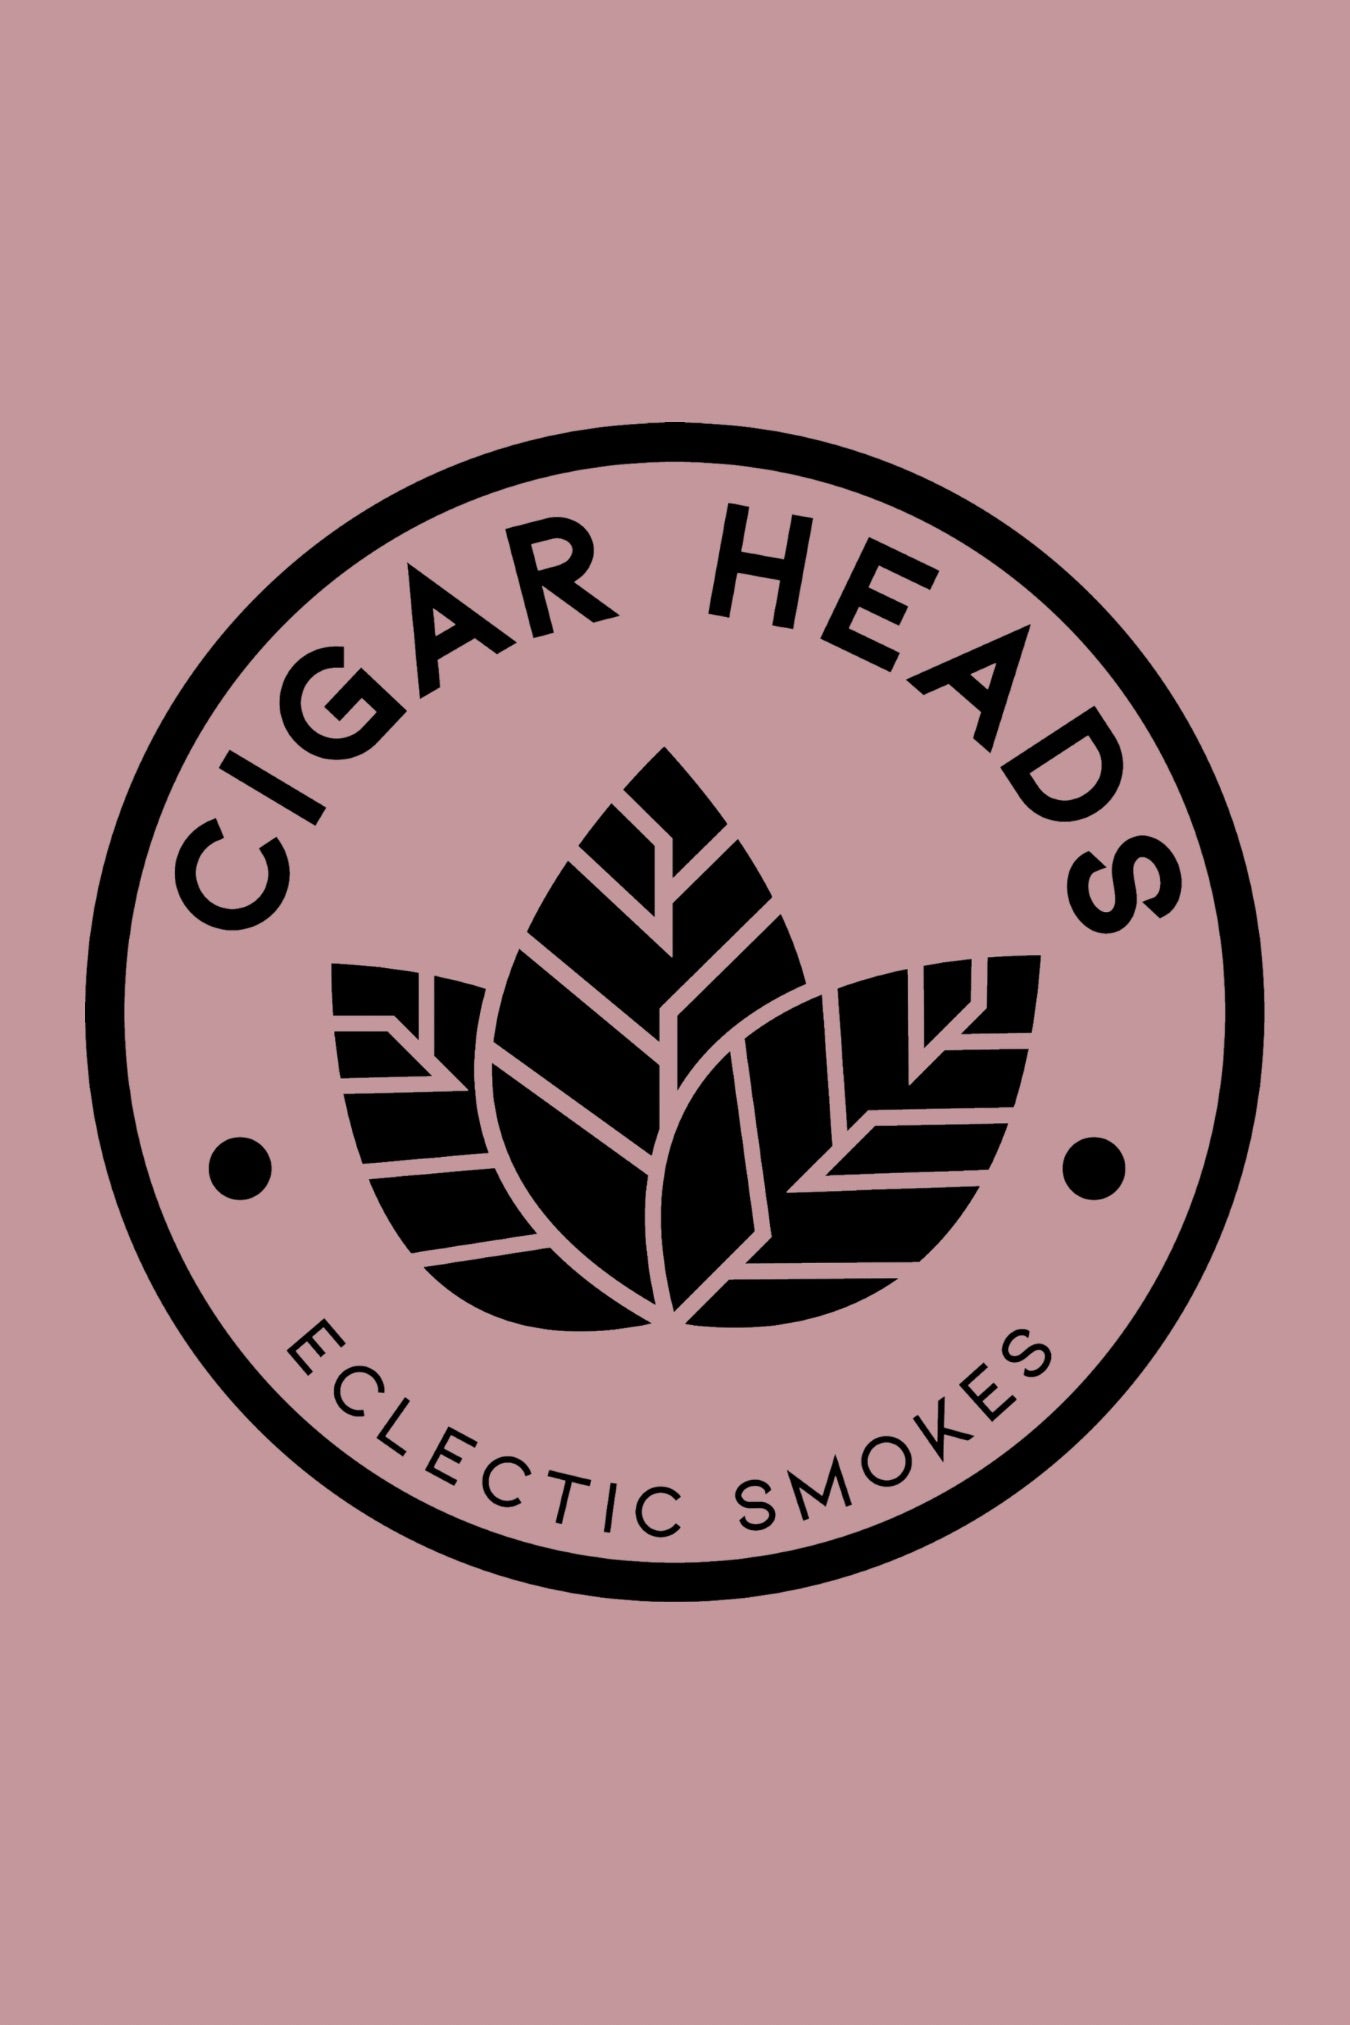 Cigar Heads Gift Card (Digital)